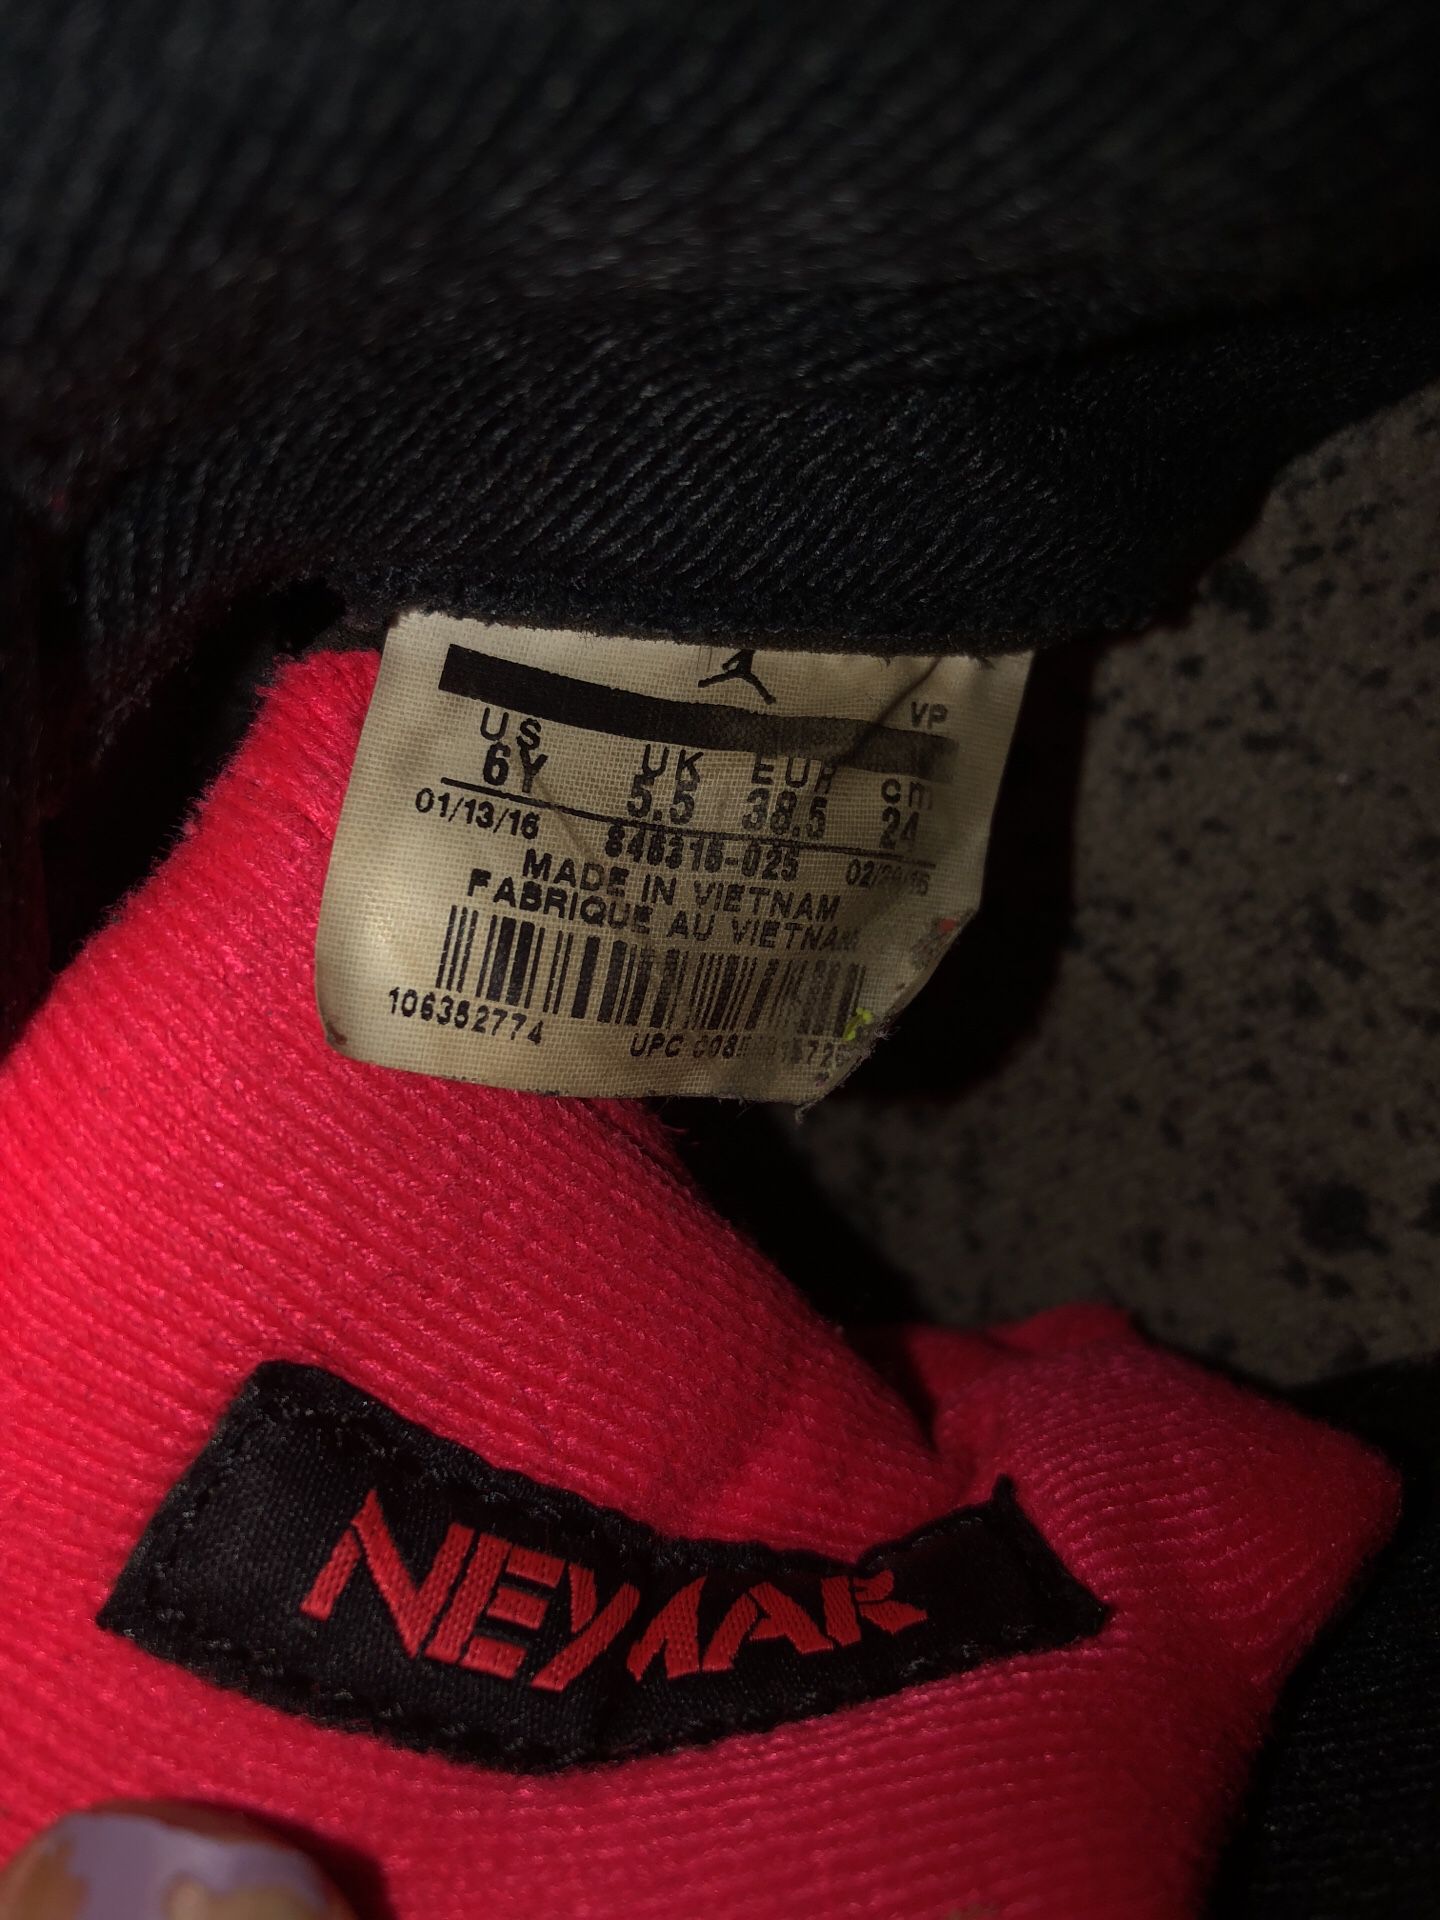 Jordan’s/Neymar shoe size 6yr for Sale in Carol Stream, IL - OfferUp